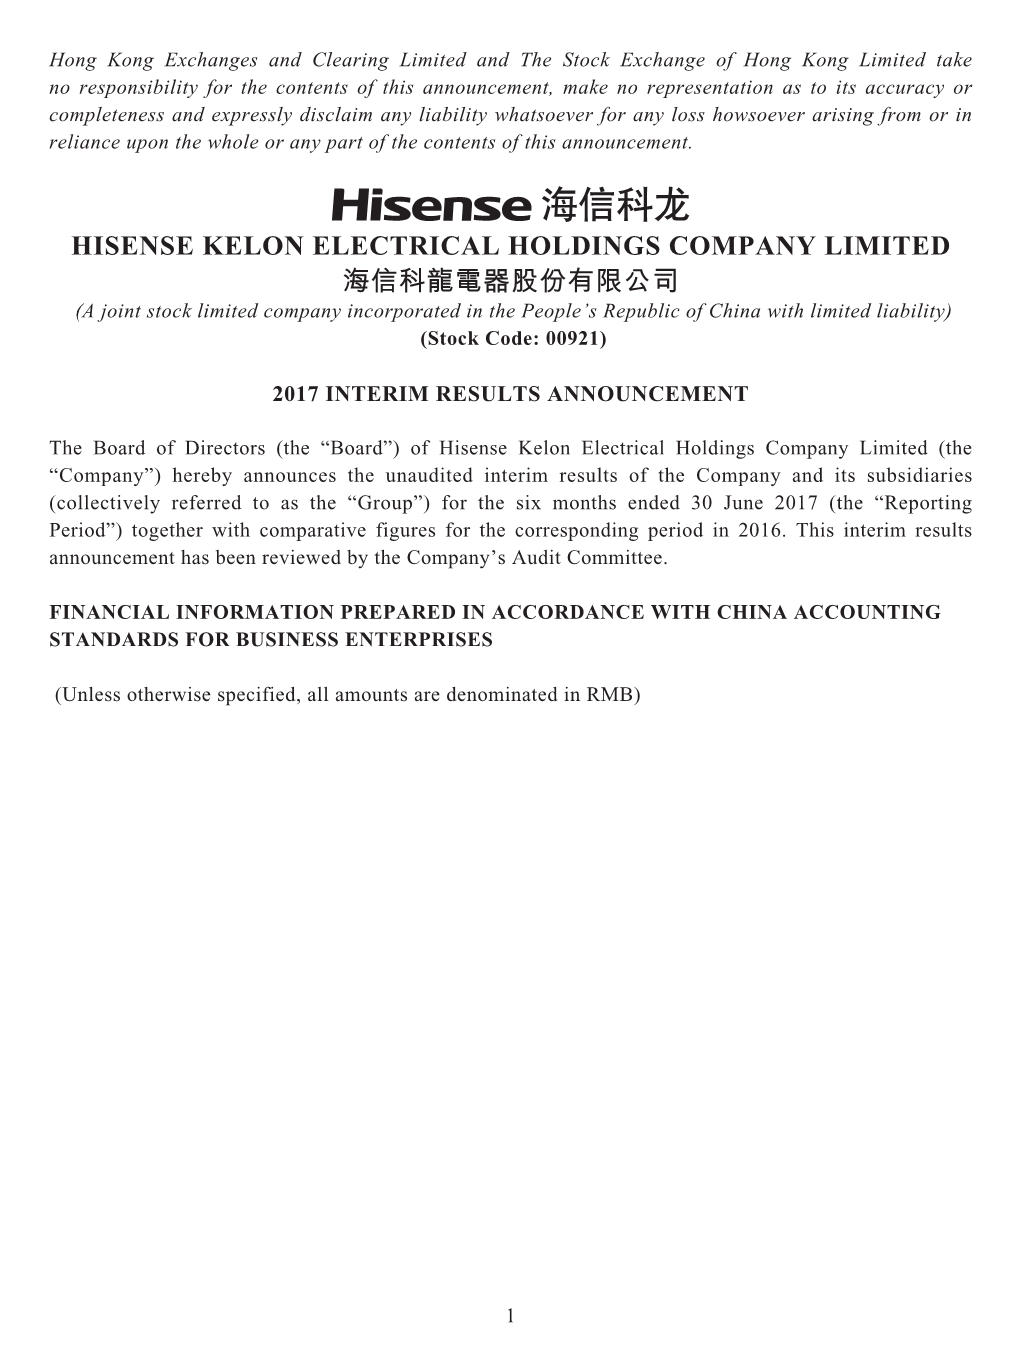 Hisense Kelon Electrical Holdings Company Limited